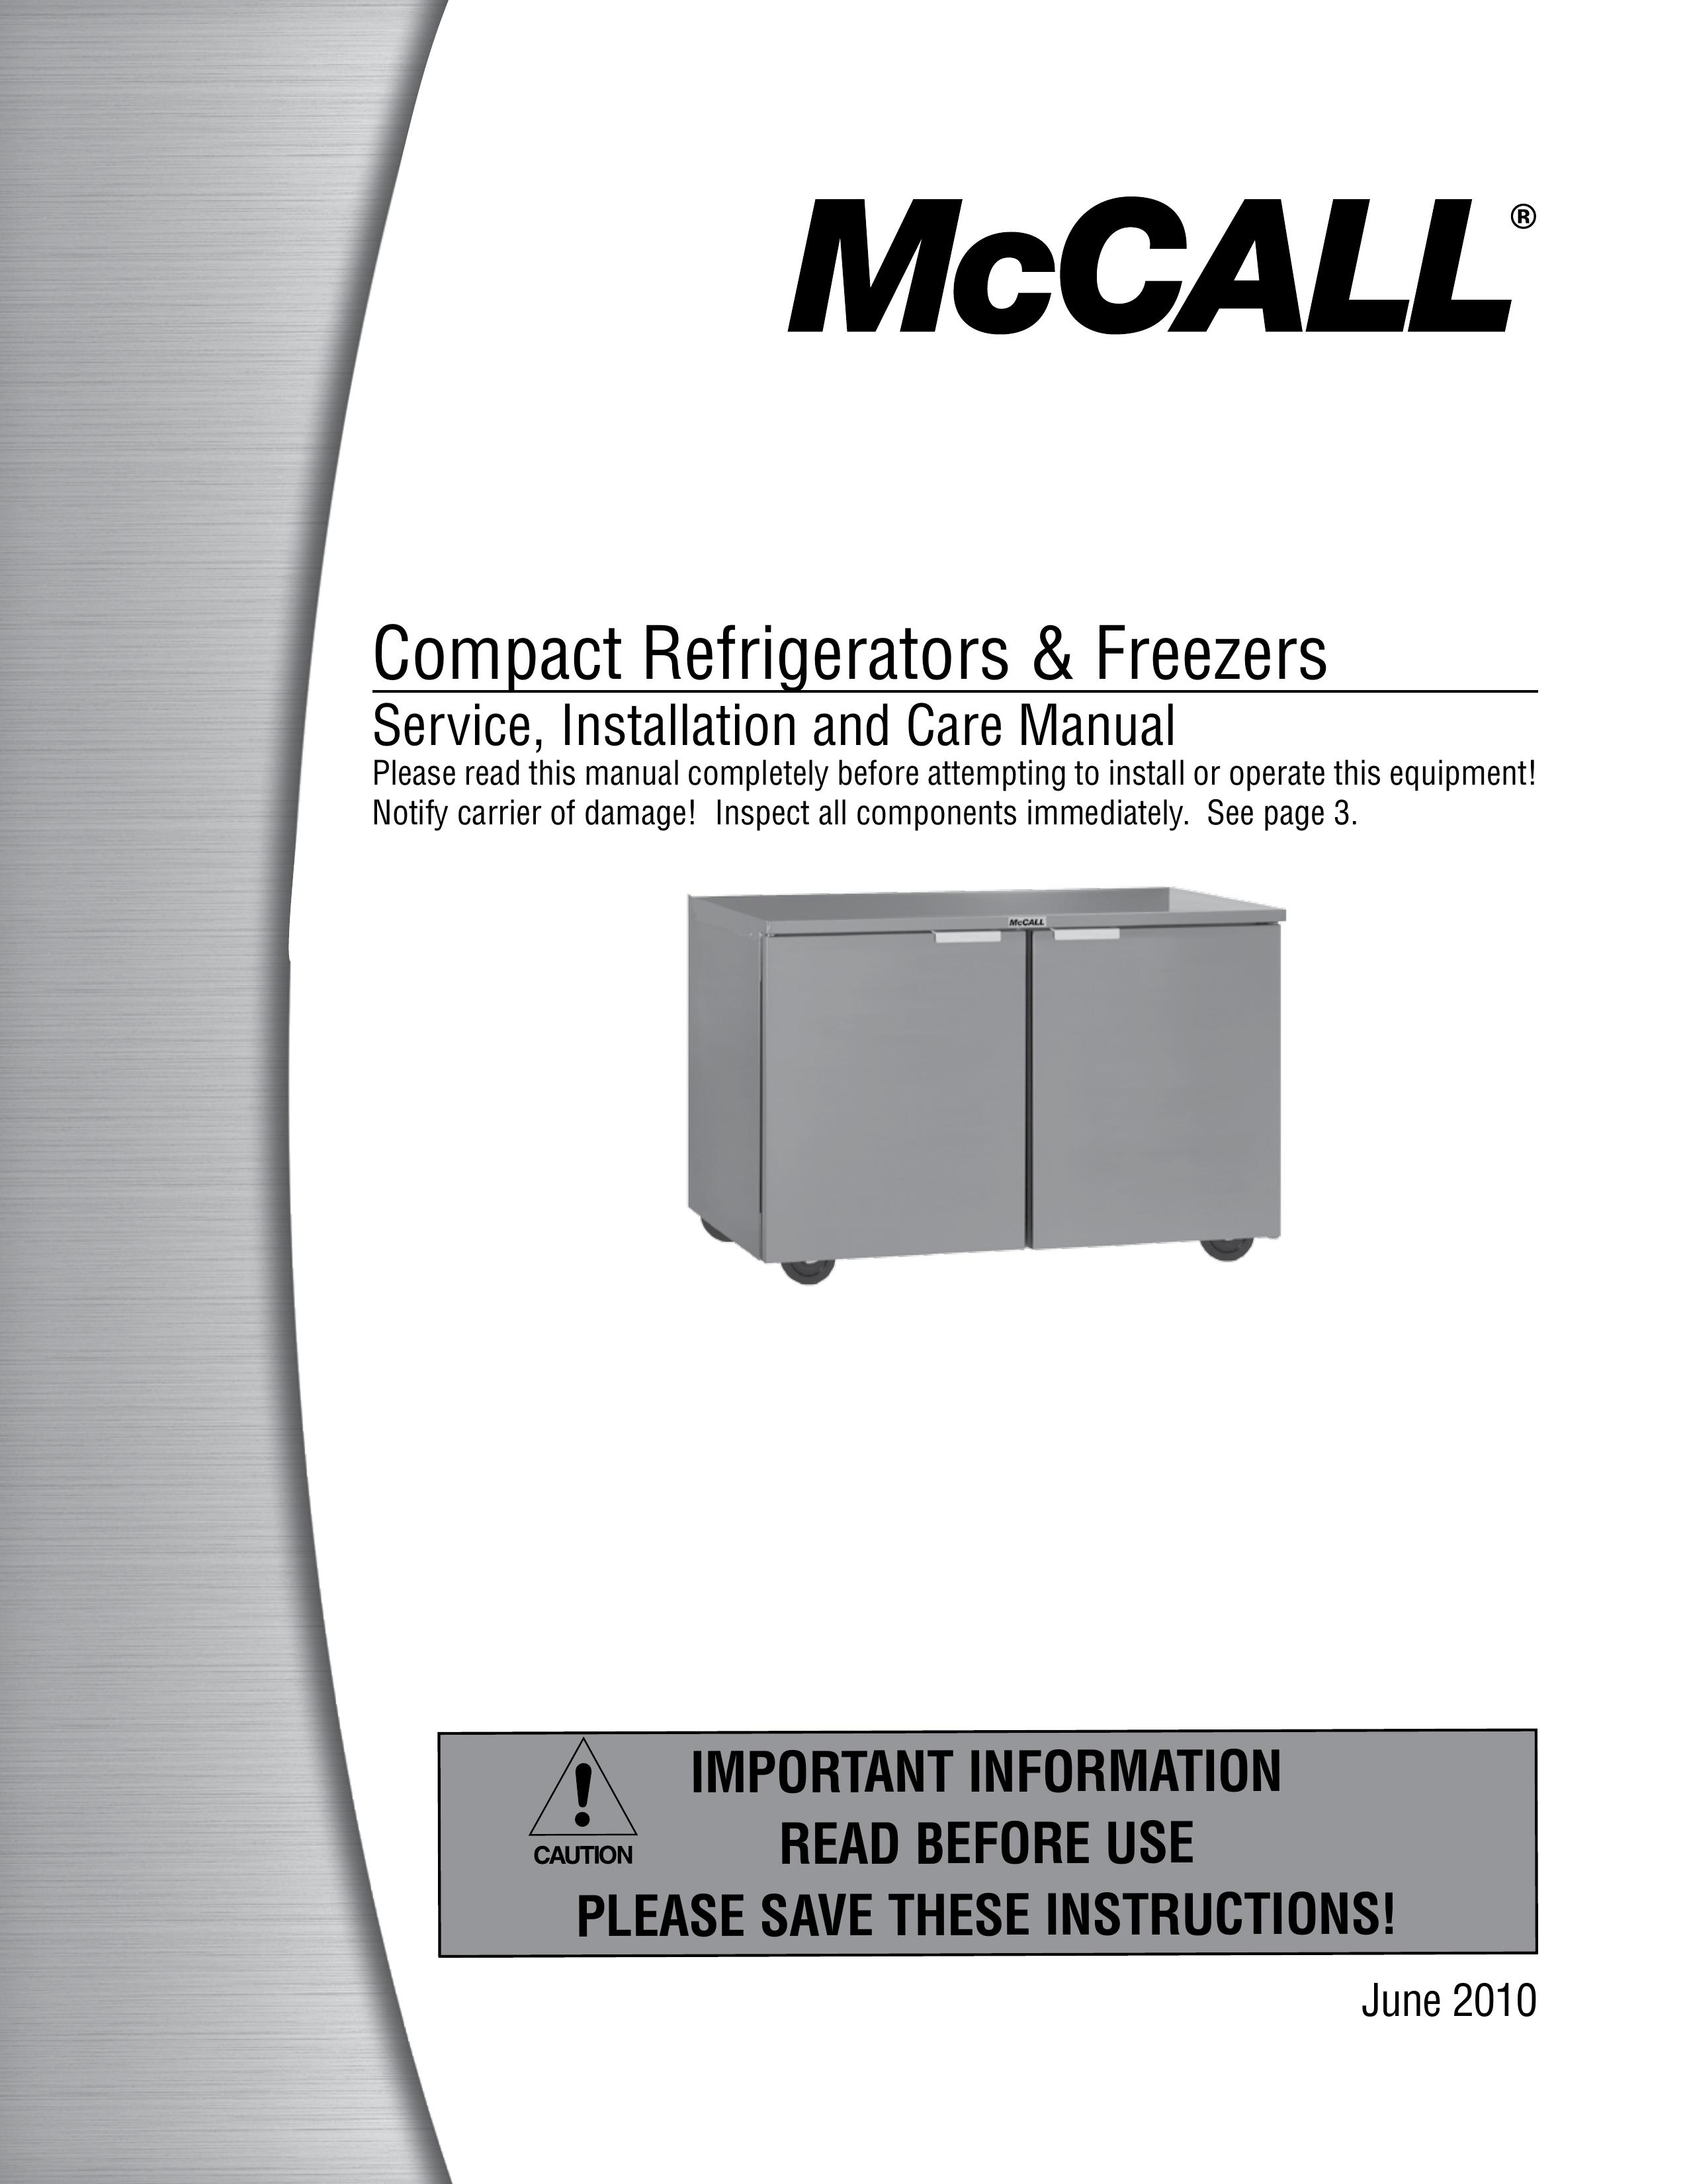 McCall Refrigeration MCCF48 Refrigerator User Manual